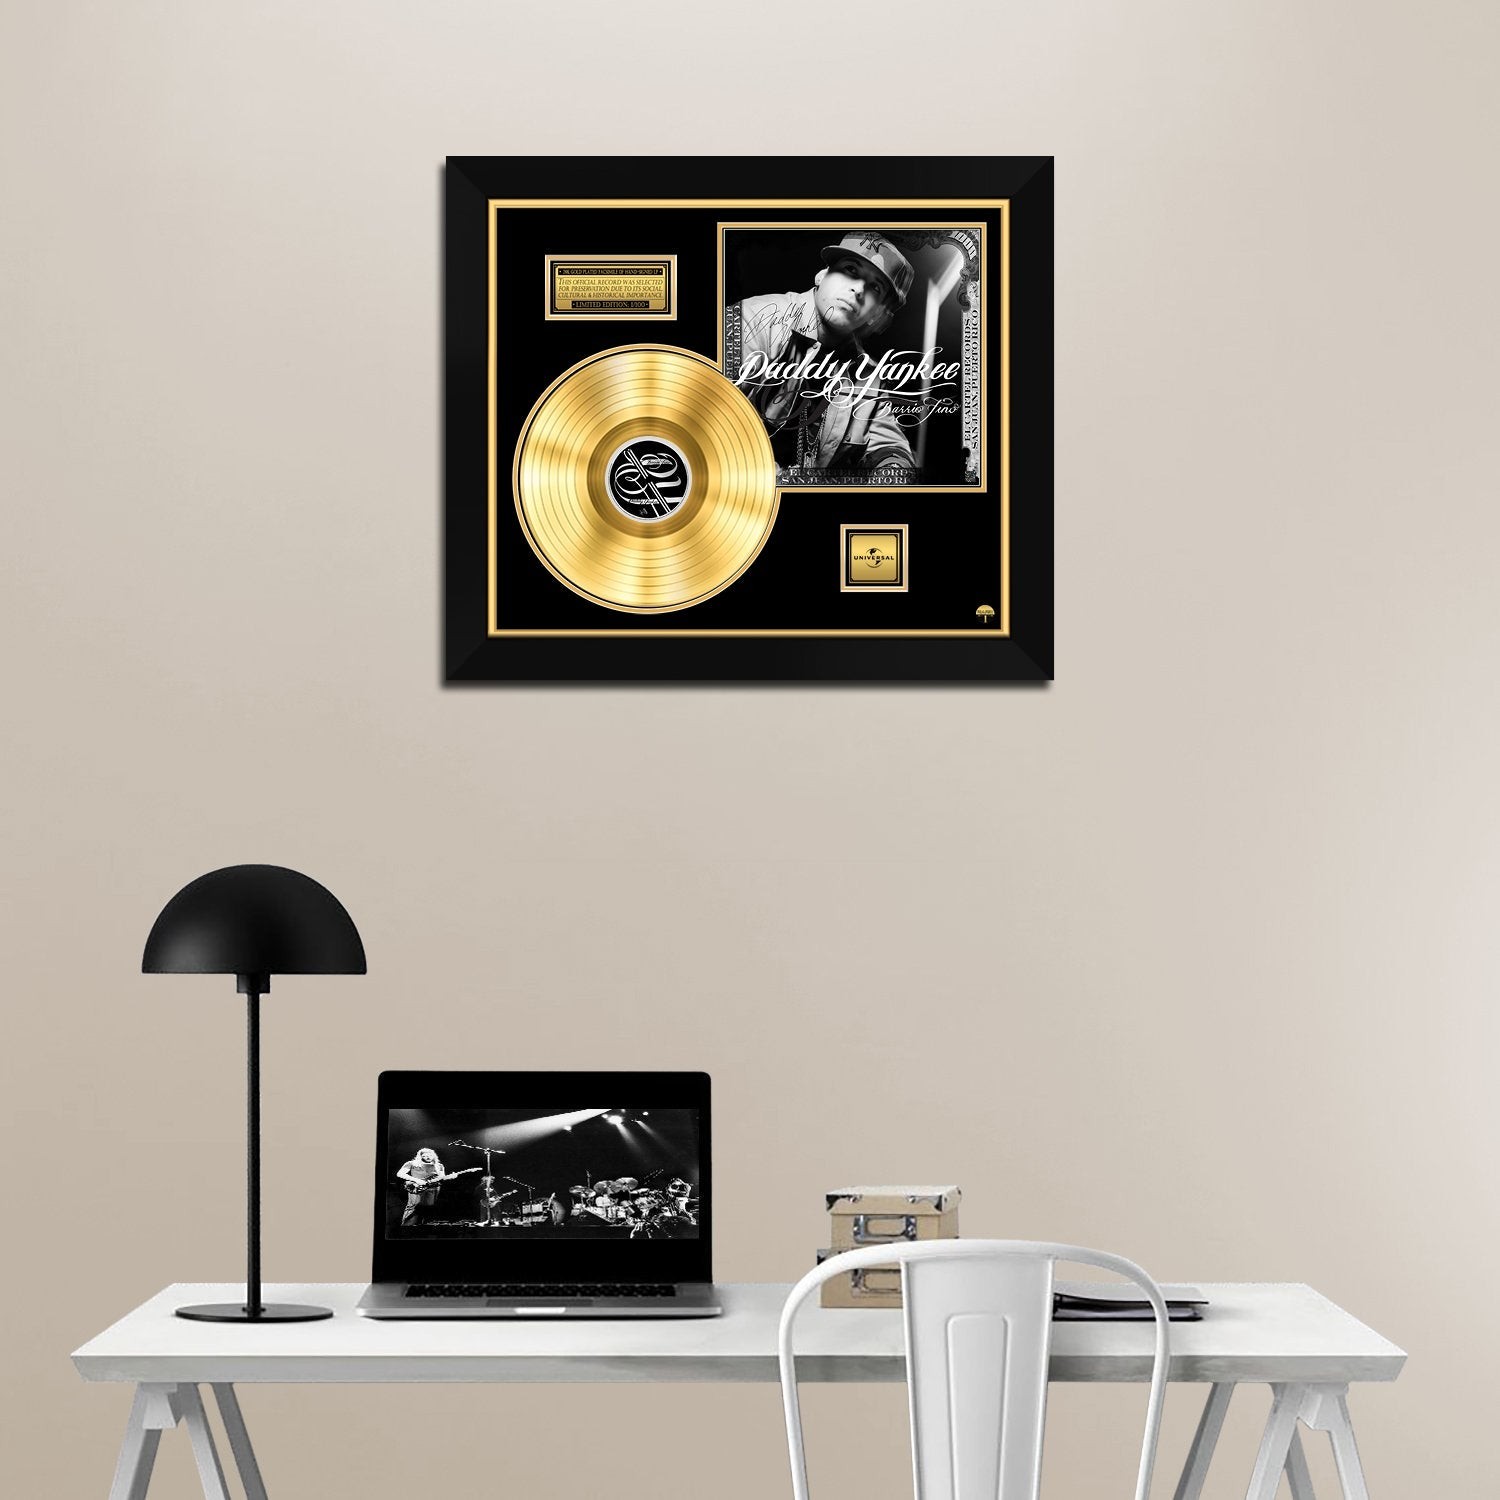 Daddy Yankee 24x36 Canvas – victorhugomariano